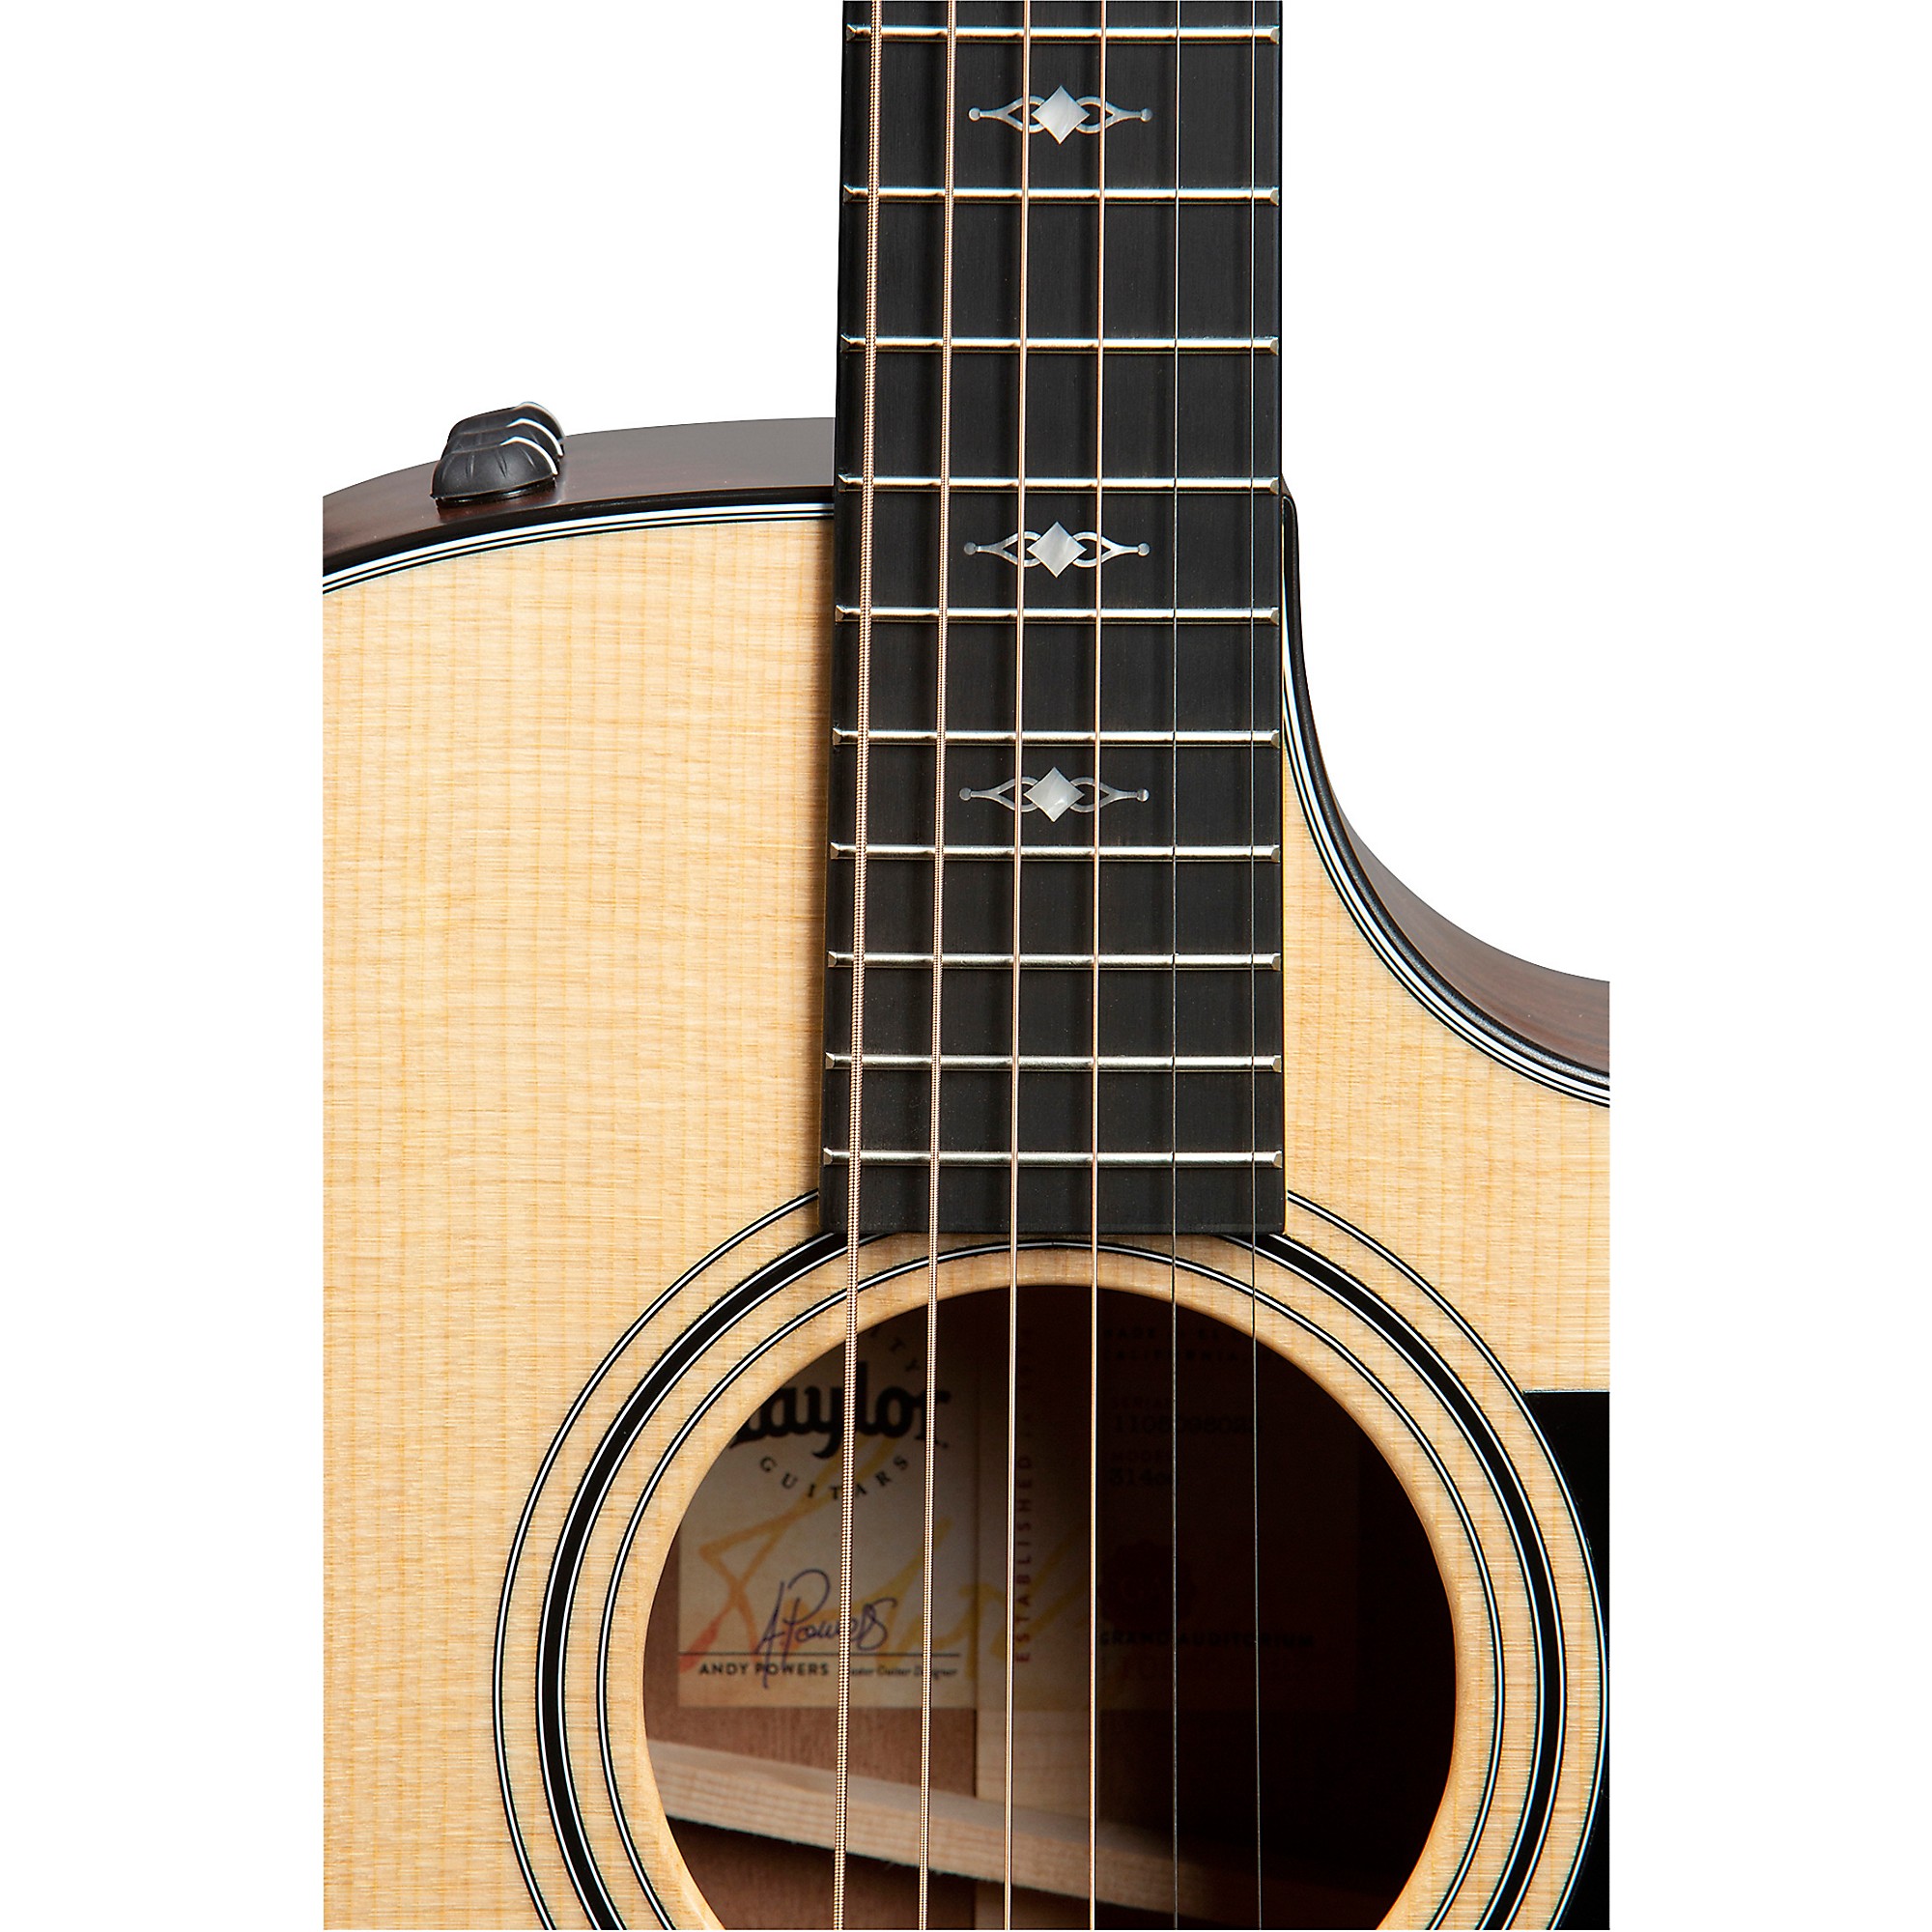 Taylor 314ce V-Class Grand Auditorium Acoustic-Electric Guitar